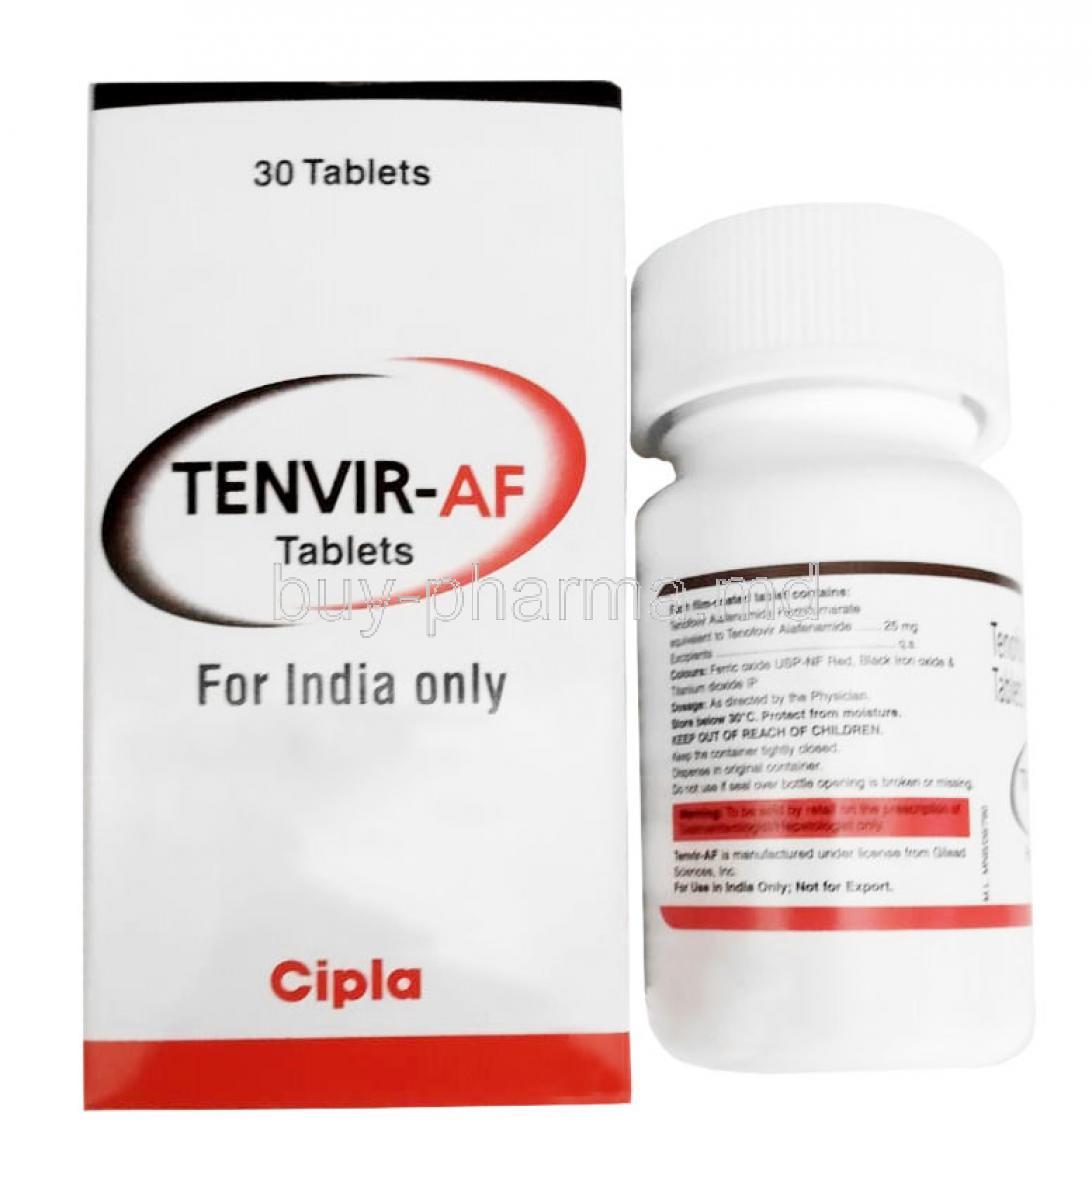 Tenvir AF, Tenofovir Alafenamide 25 mg, Cipla, Box and bottle information, Dosage, Storage